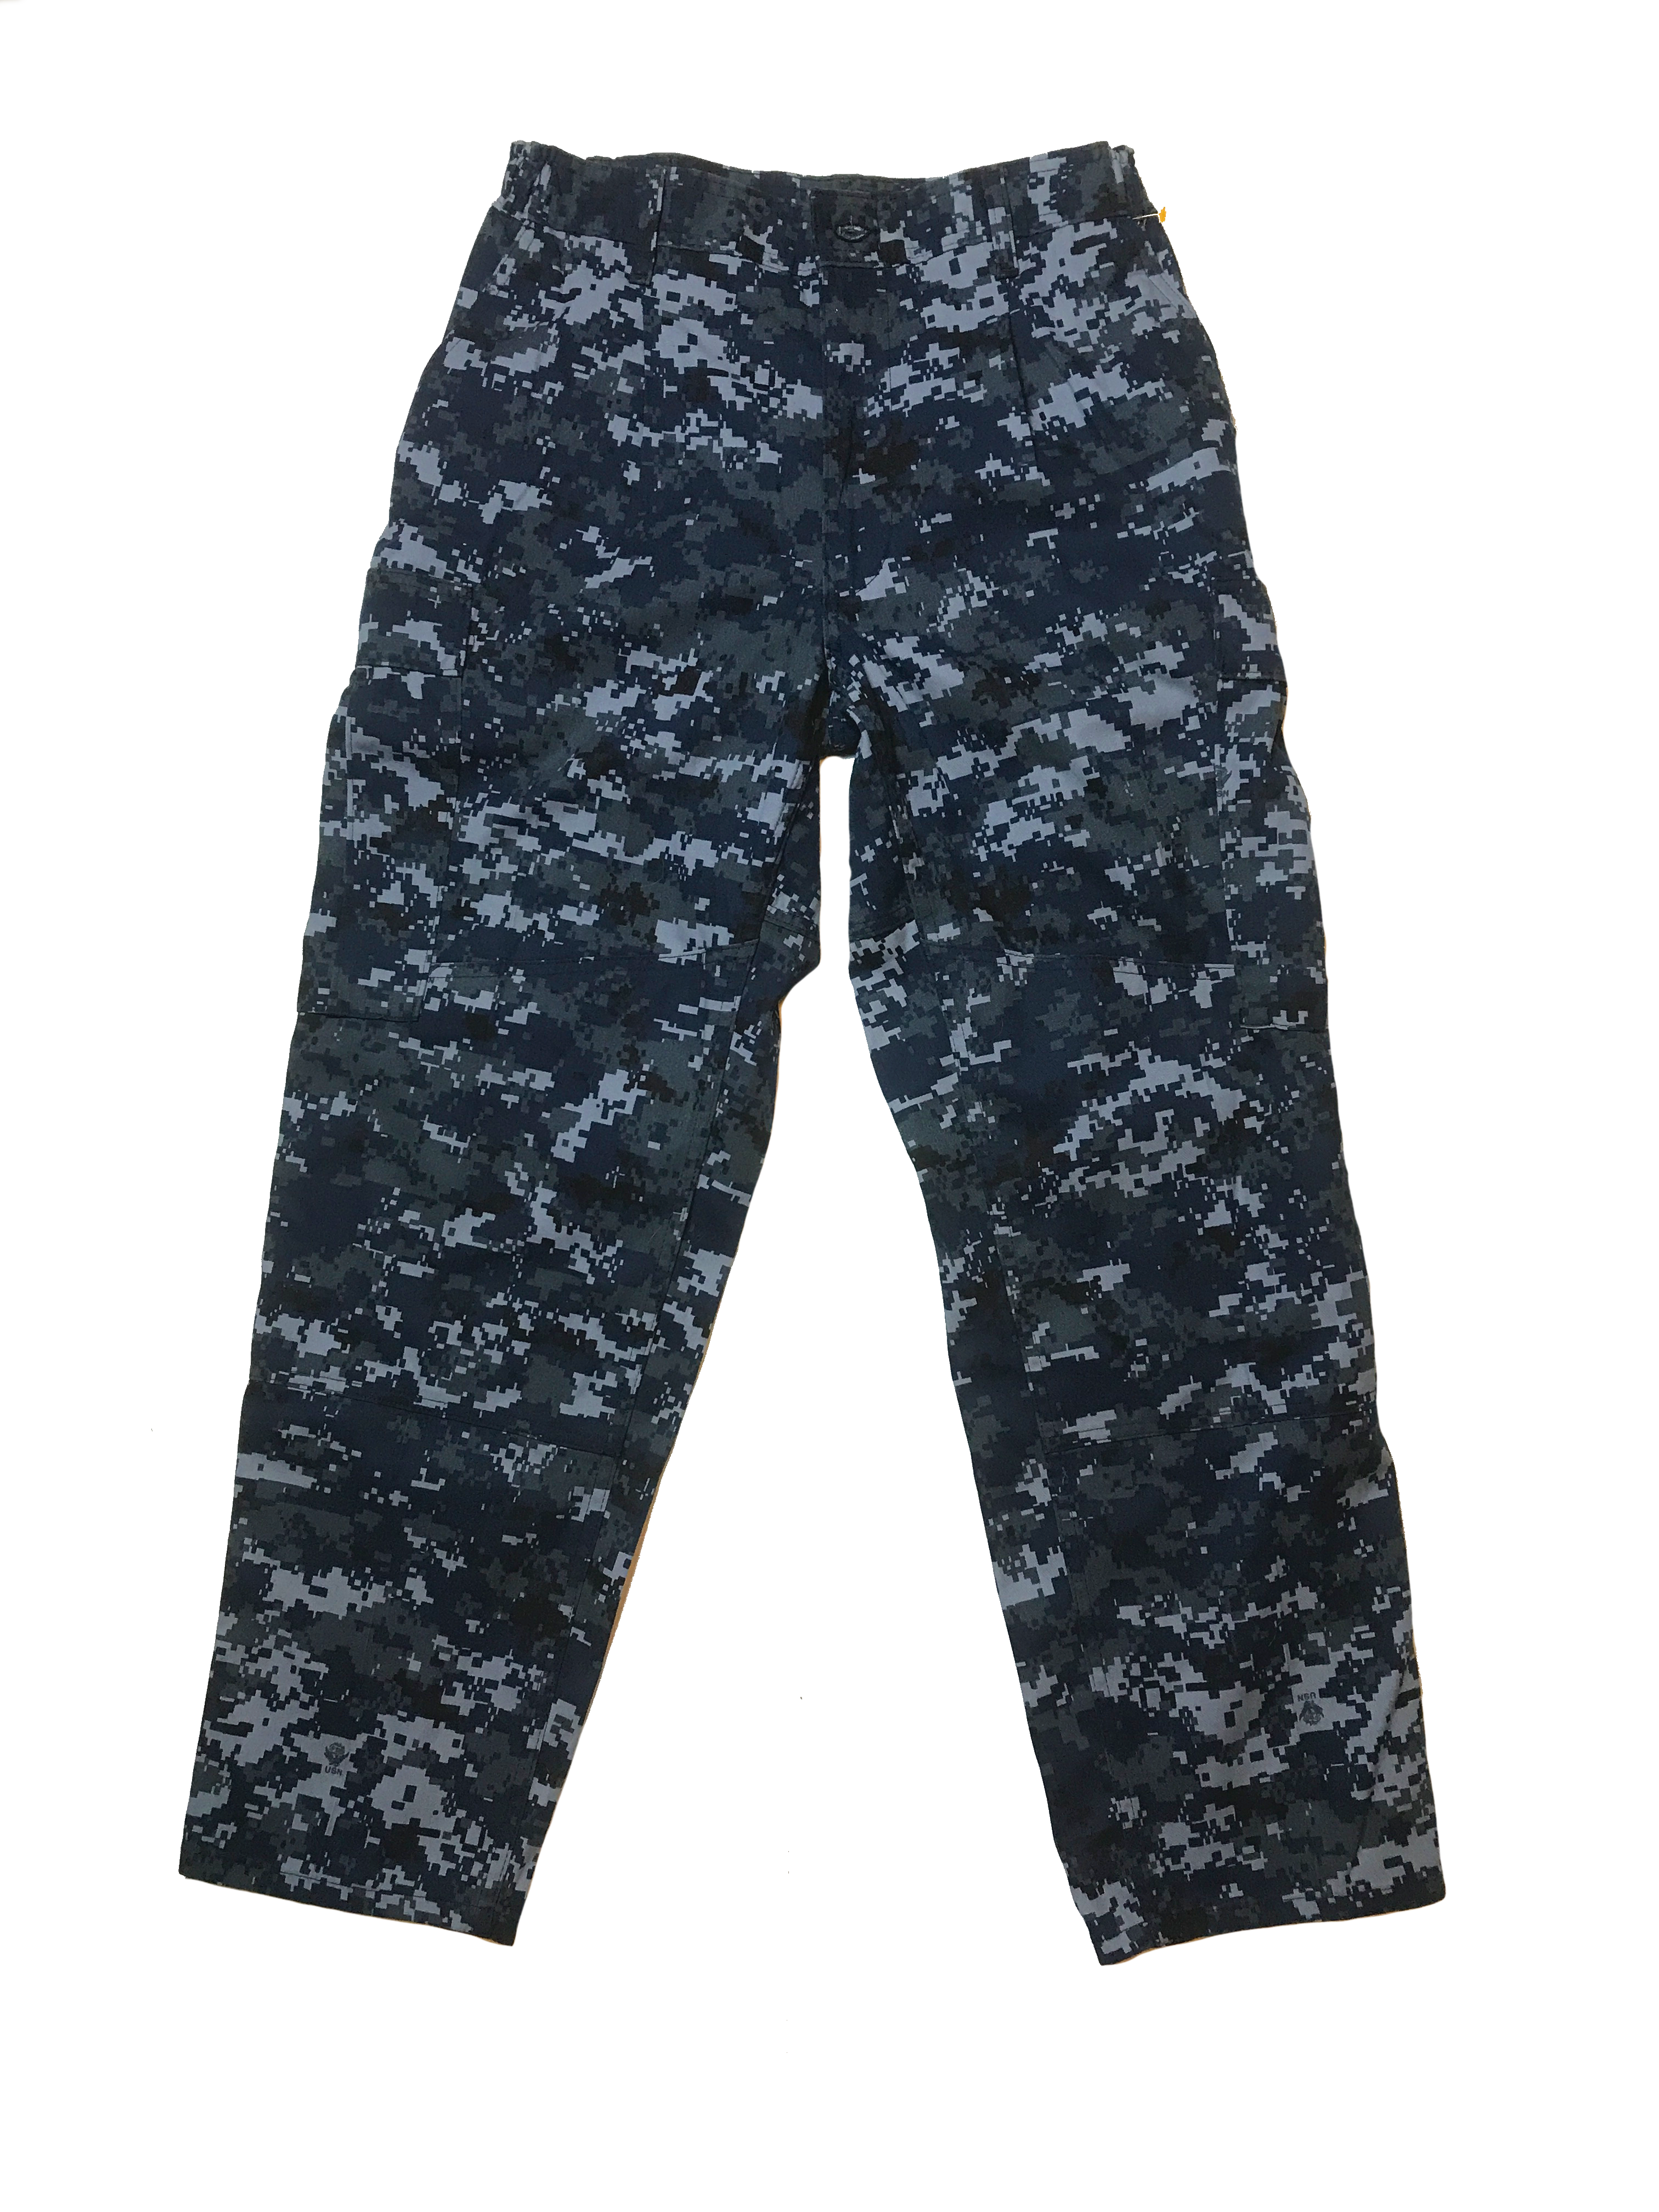 NWU Blue Camo Trousers - Navy Working Uniform Pants